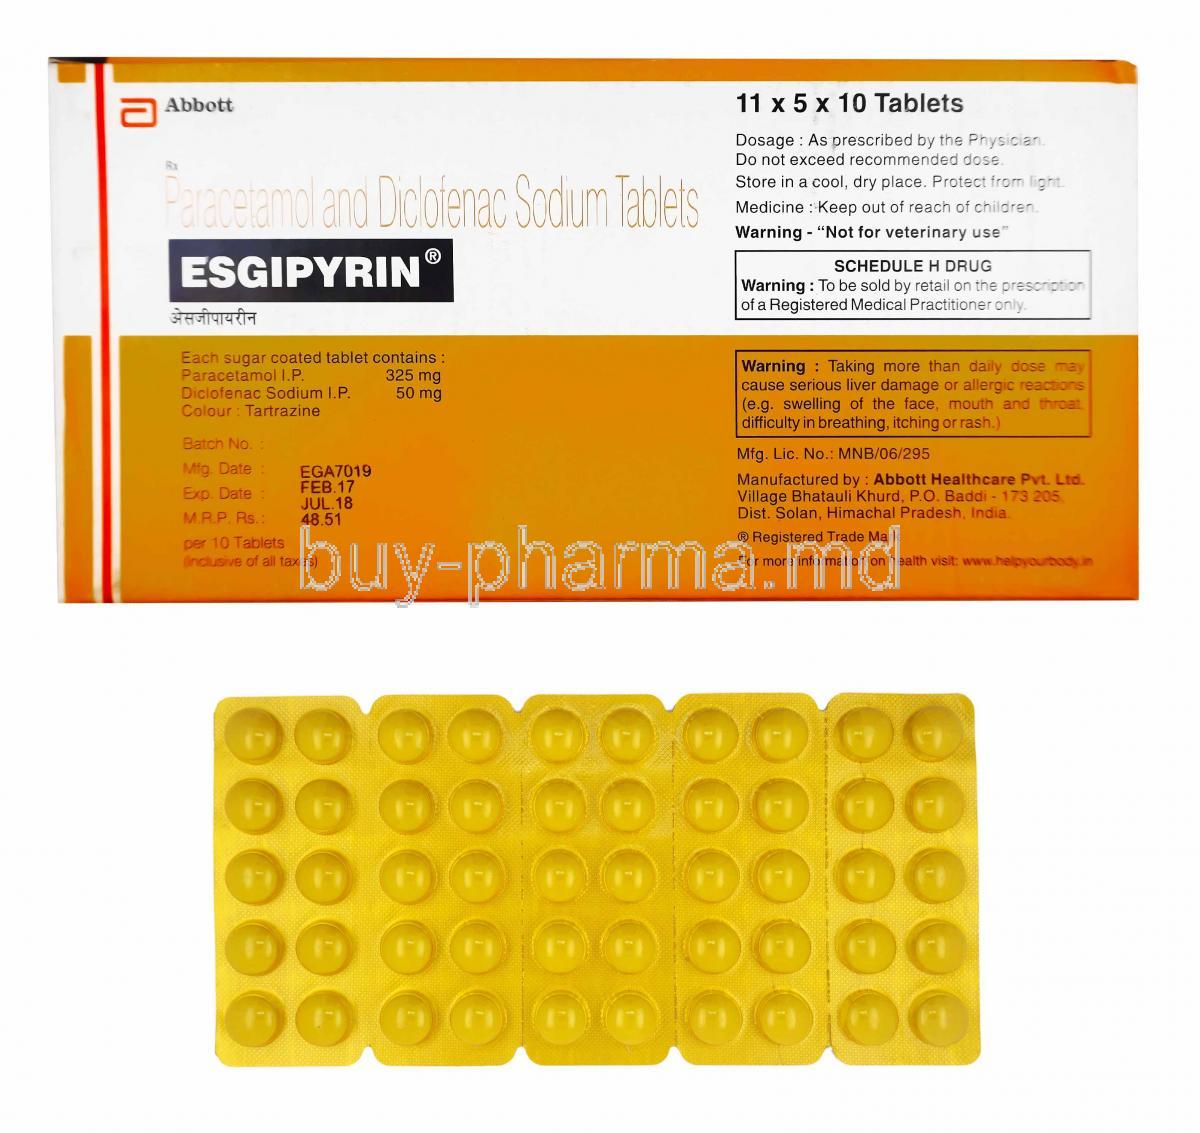 Esgipyrin, Diclofenac 50mg and Paracetamol 325mg, box and tablets